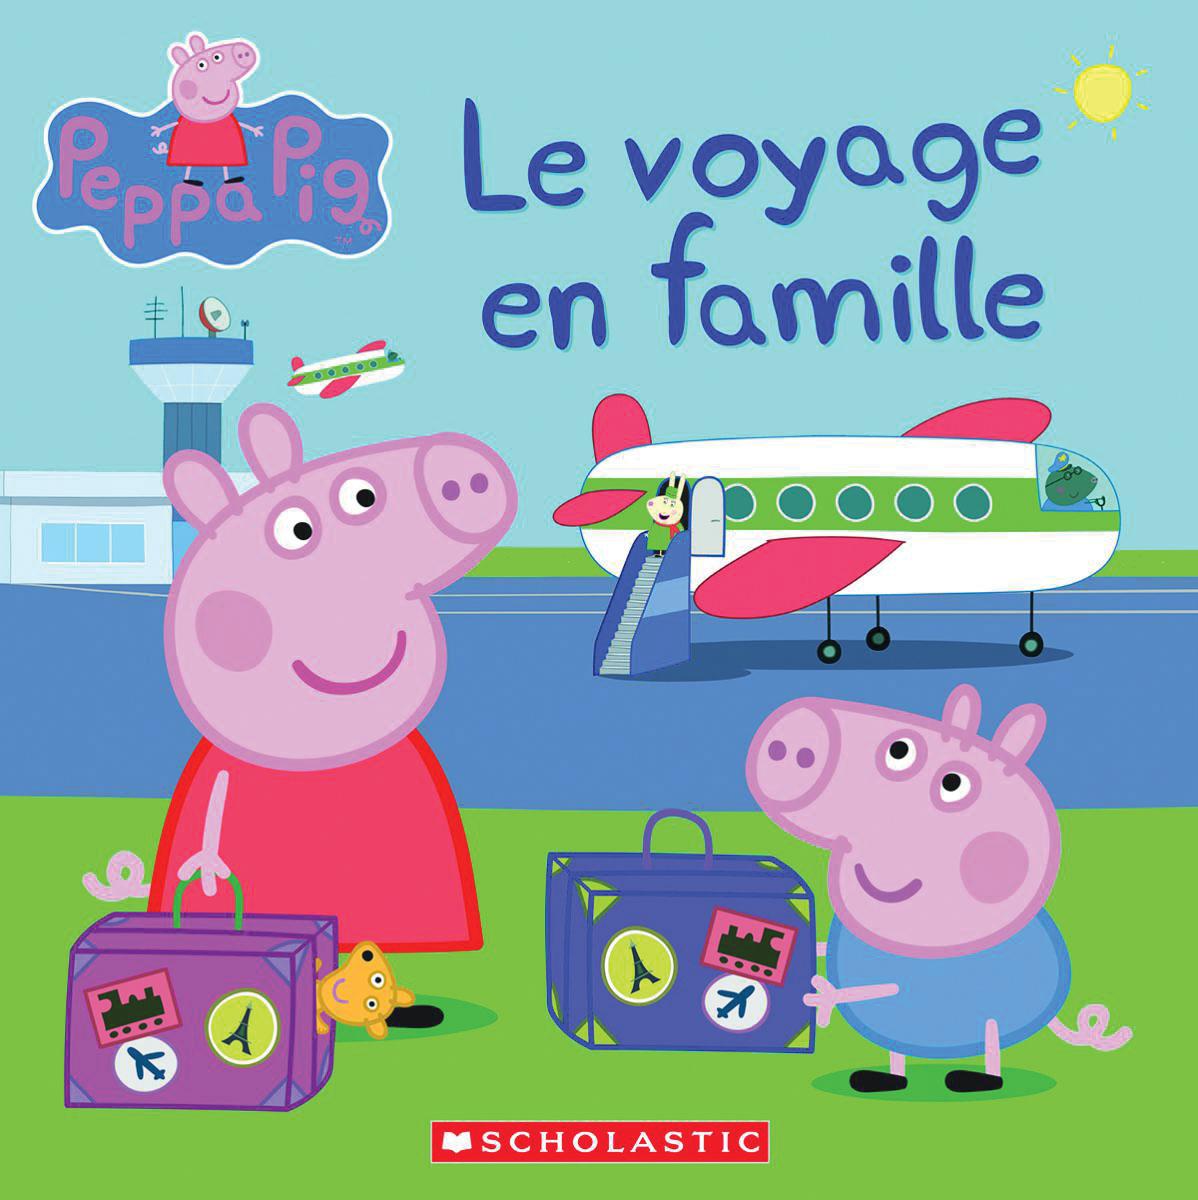  Peppa Pig : Le voyage en famille 